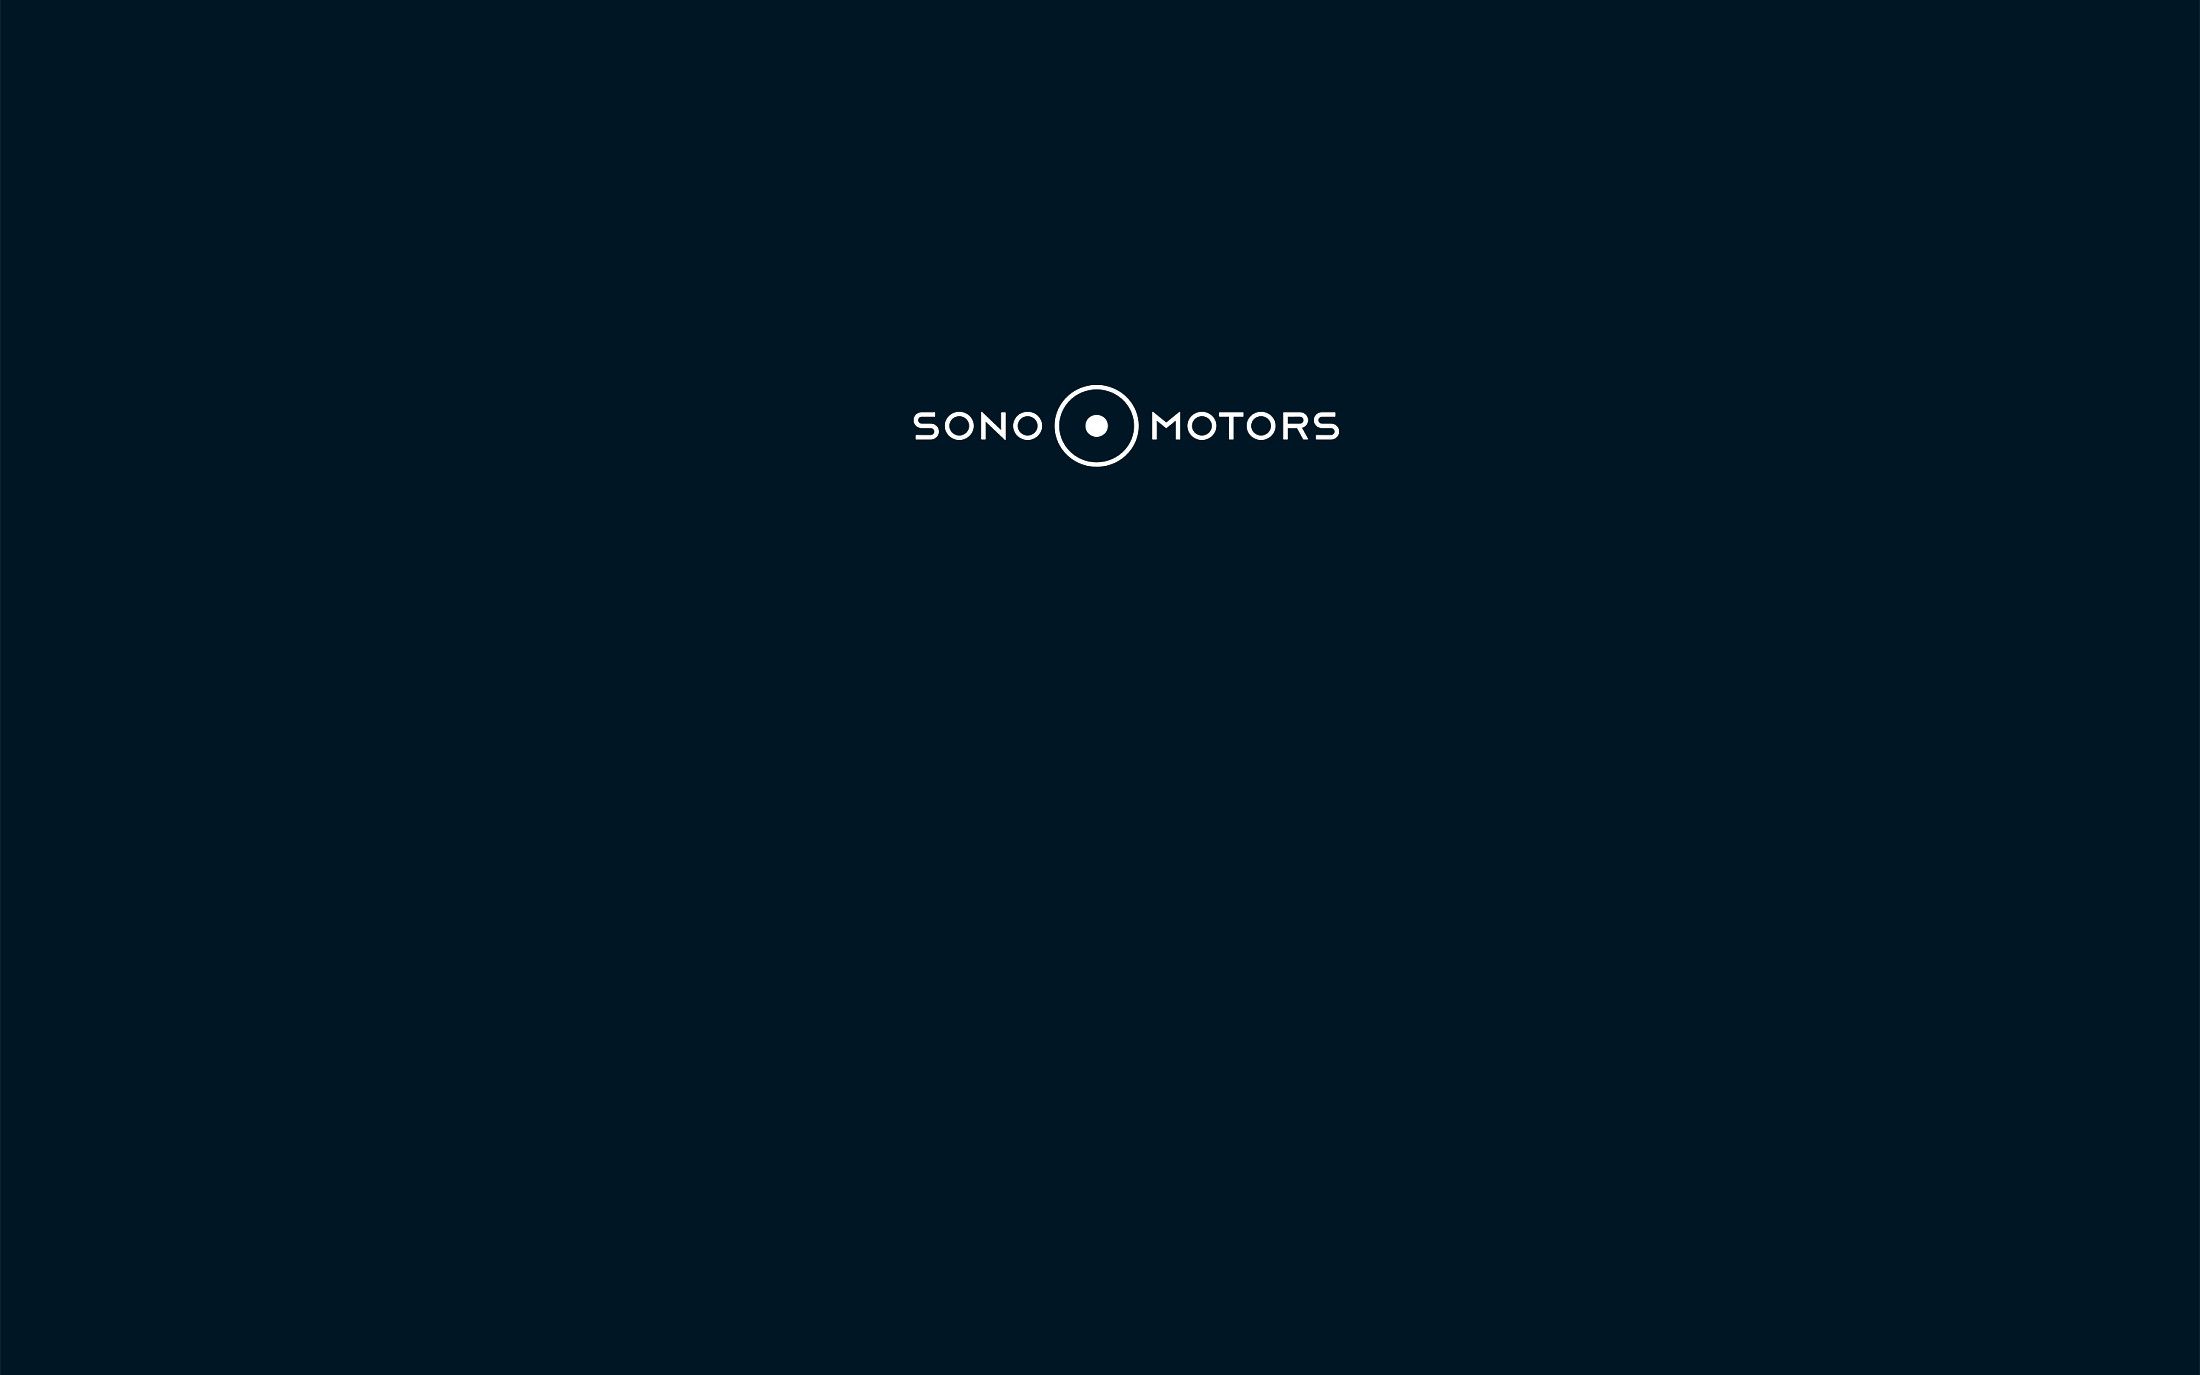 Raise of $31.1 Million via Convertible Debentures | Sono Motors